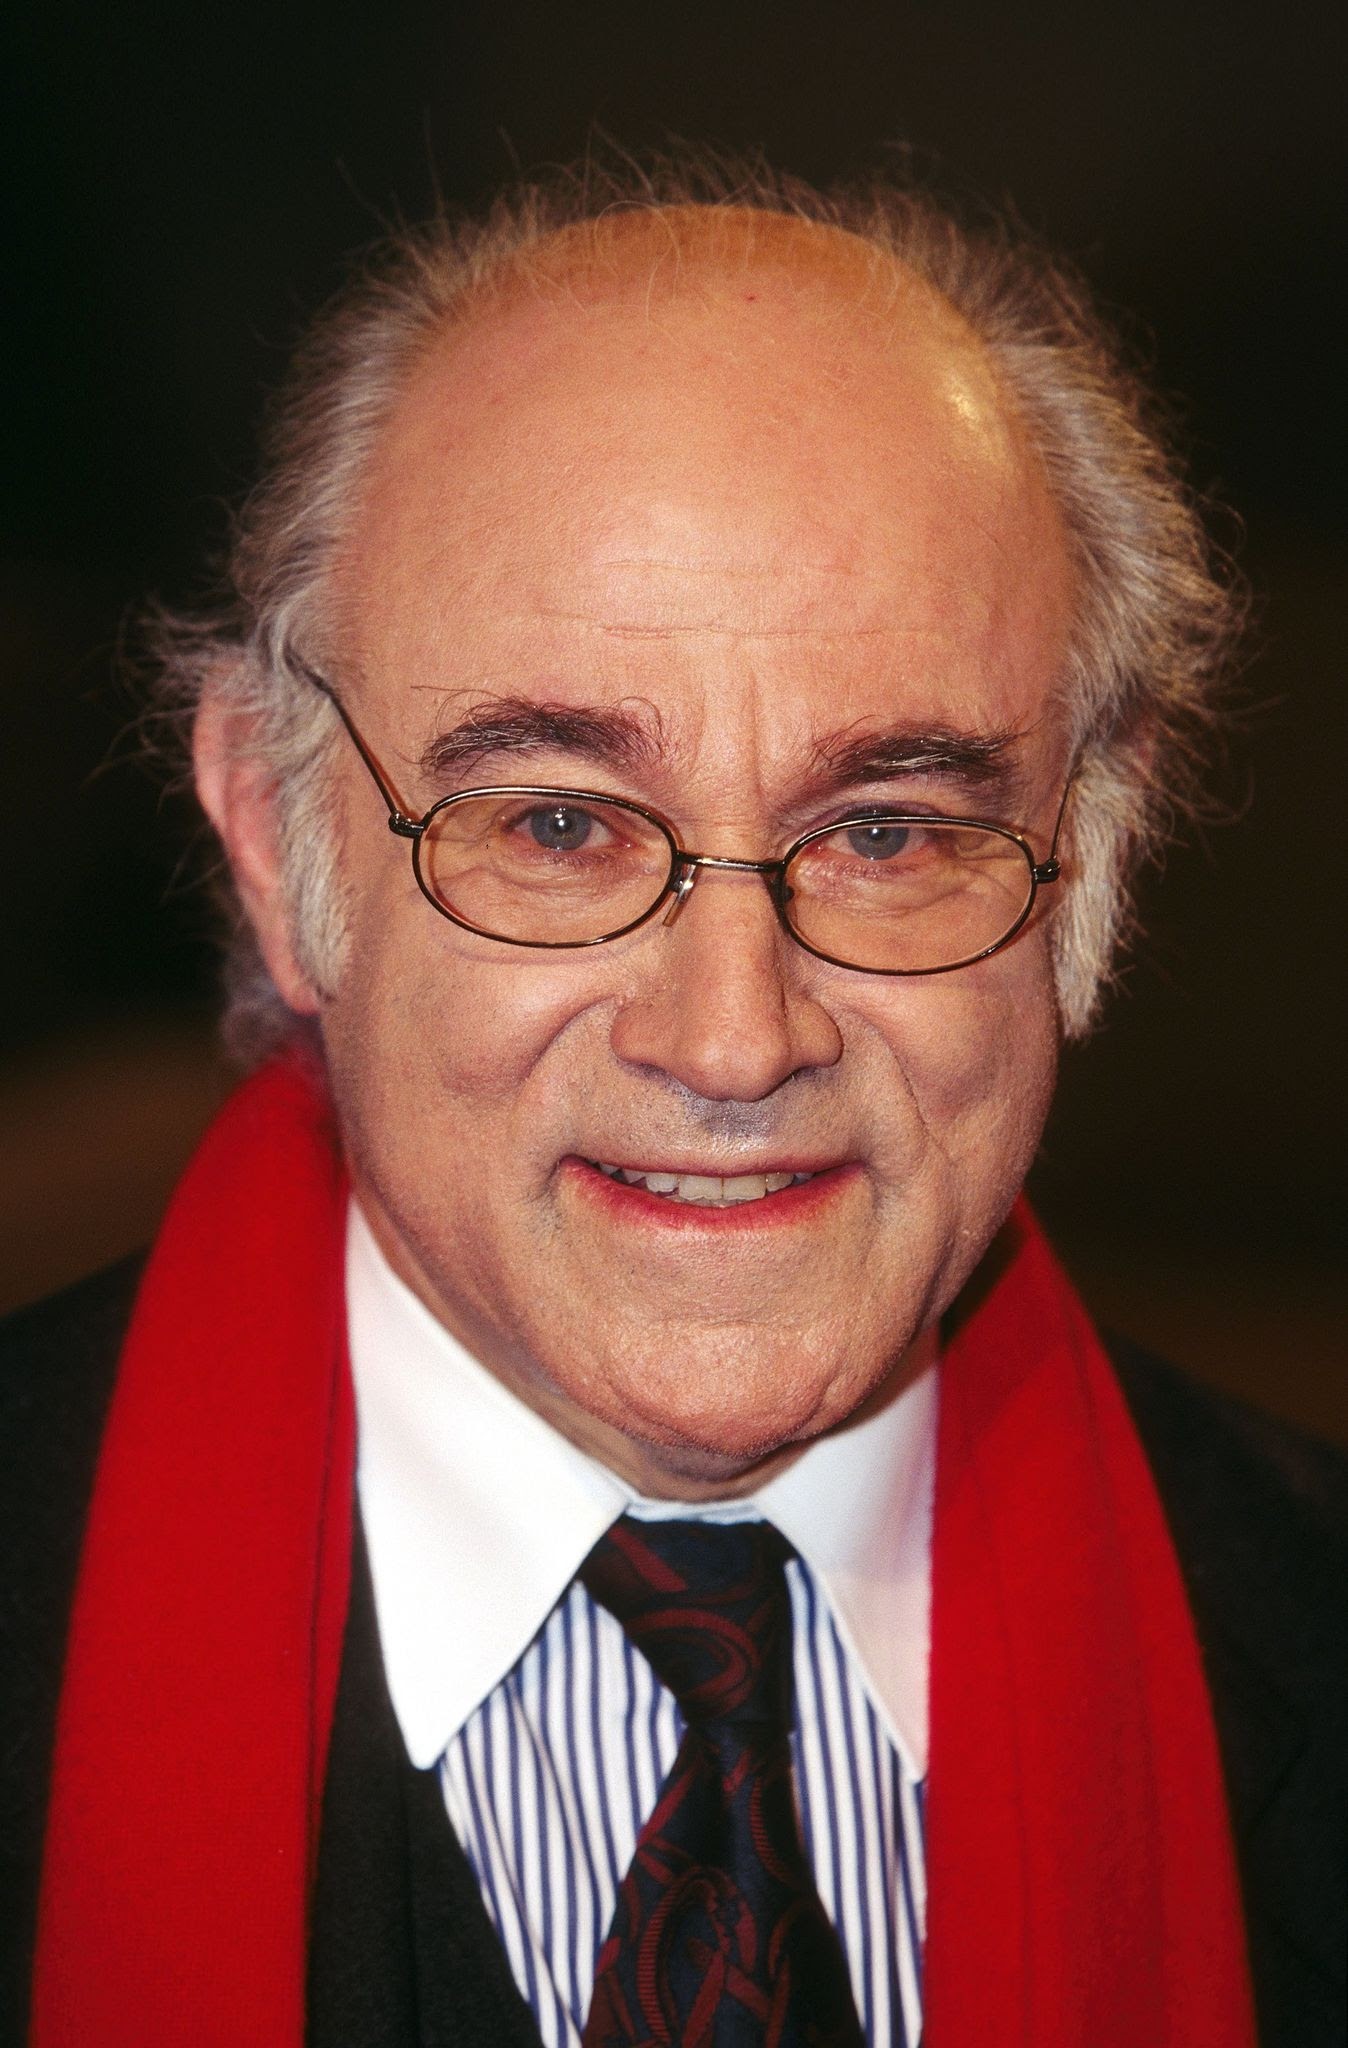 Pierre Rosenberg